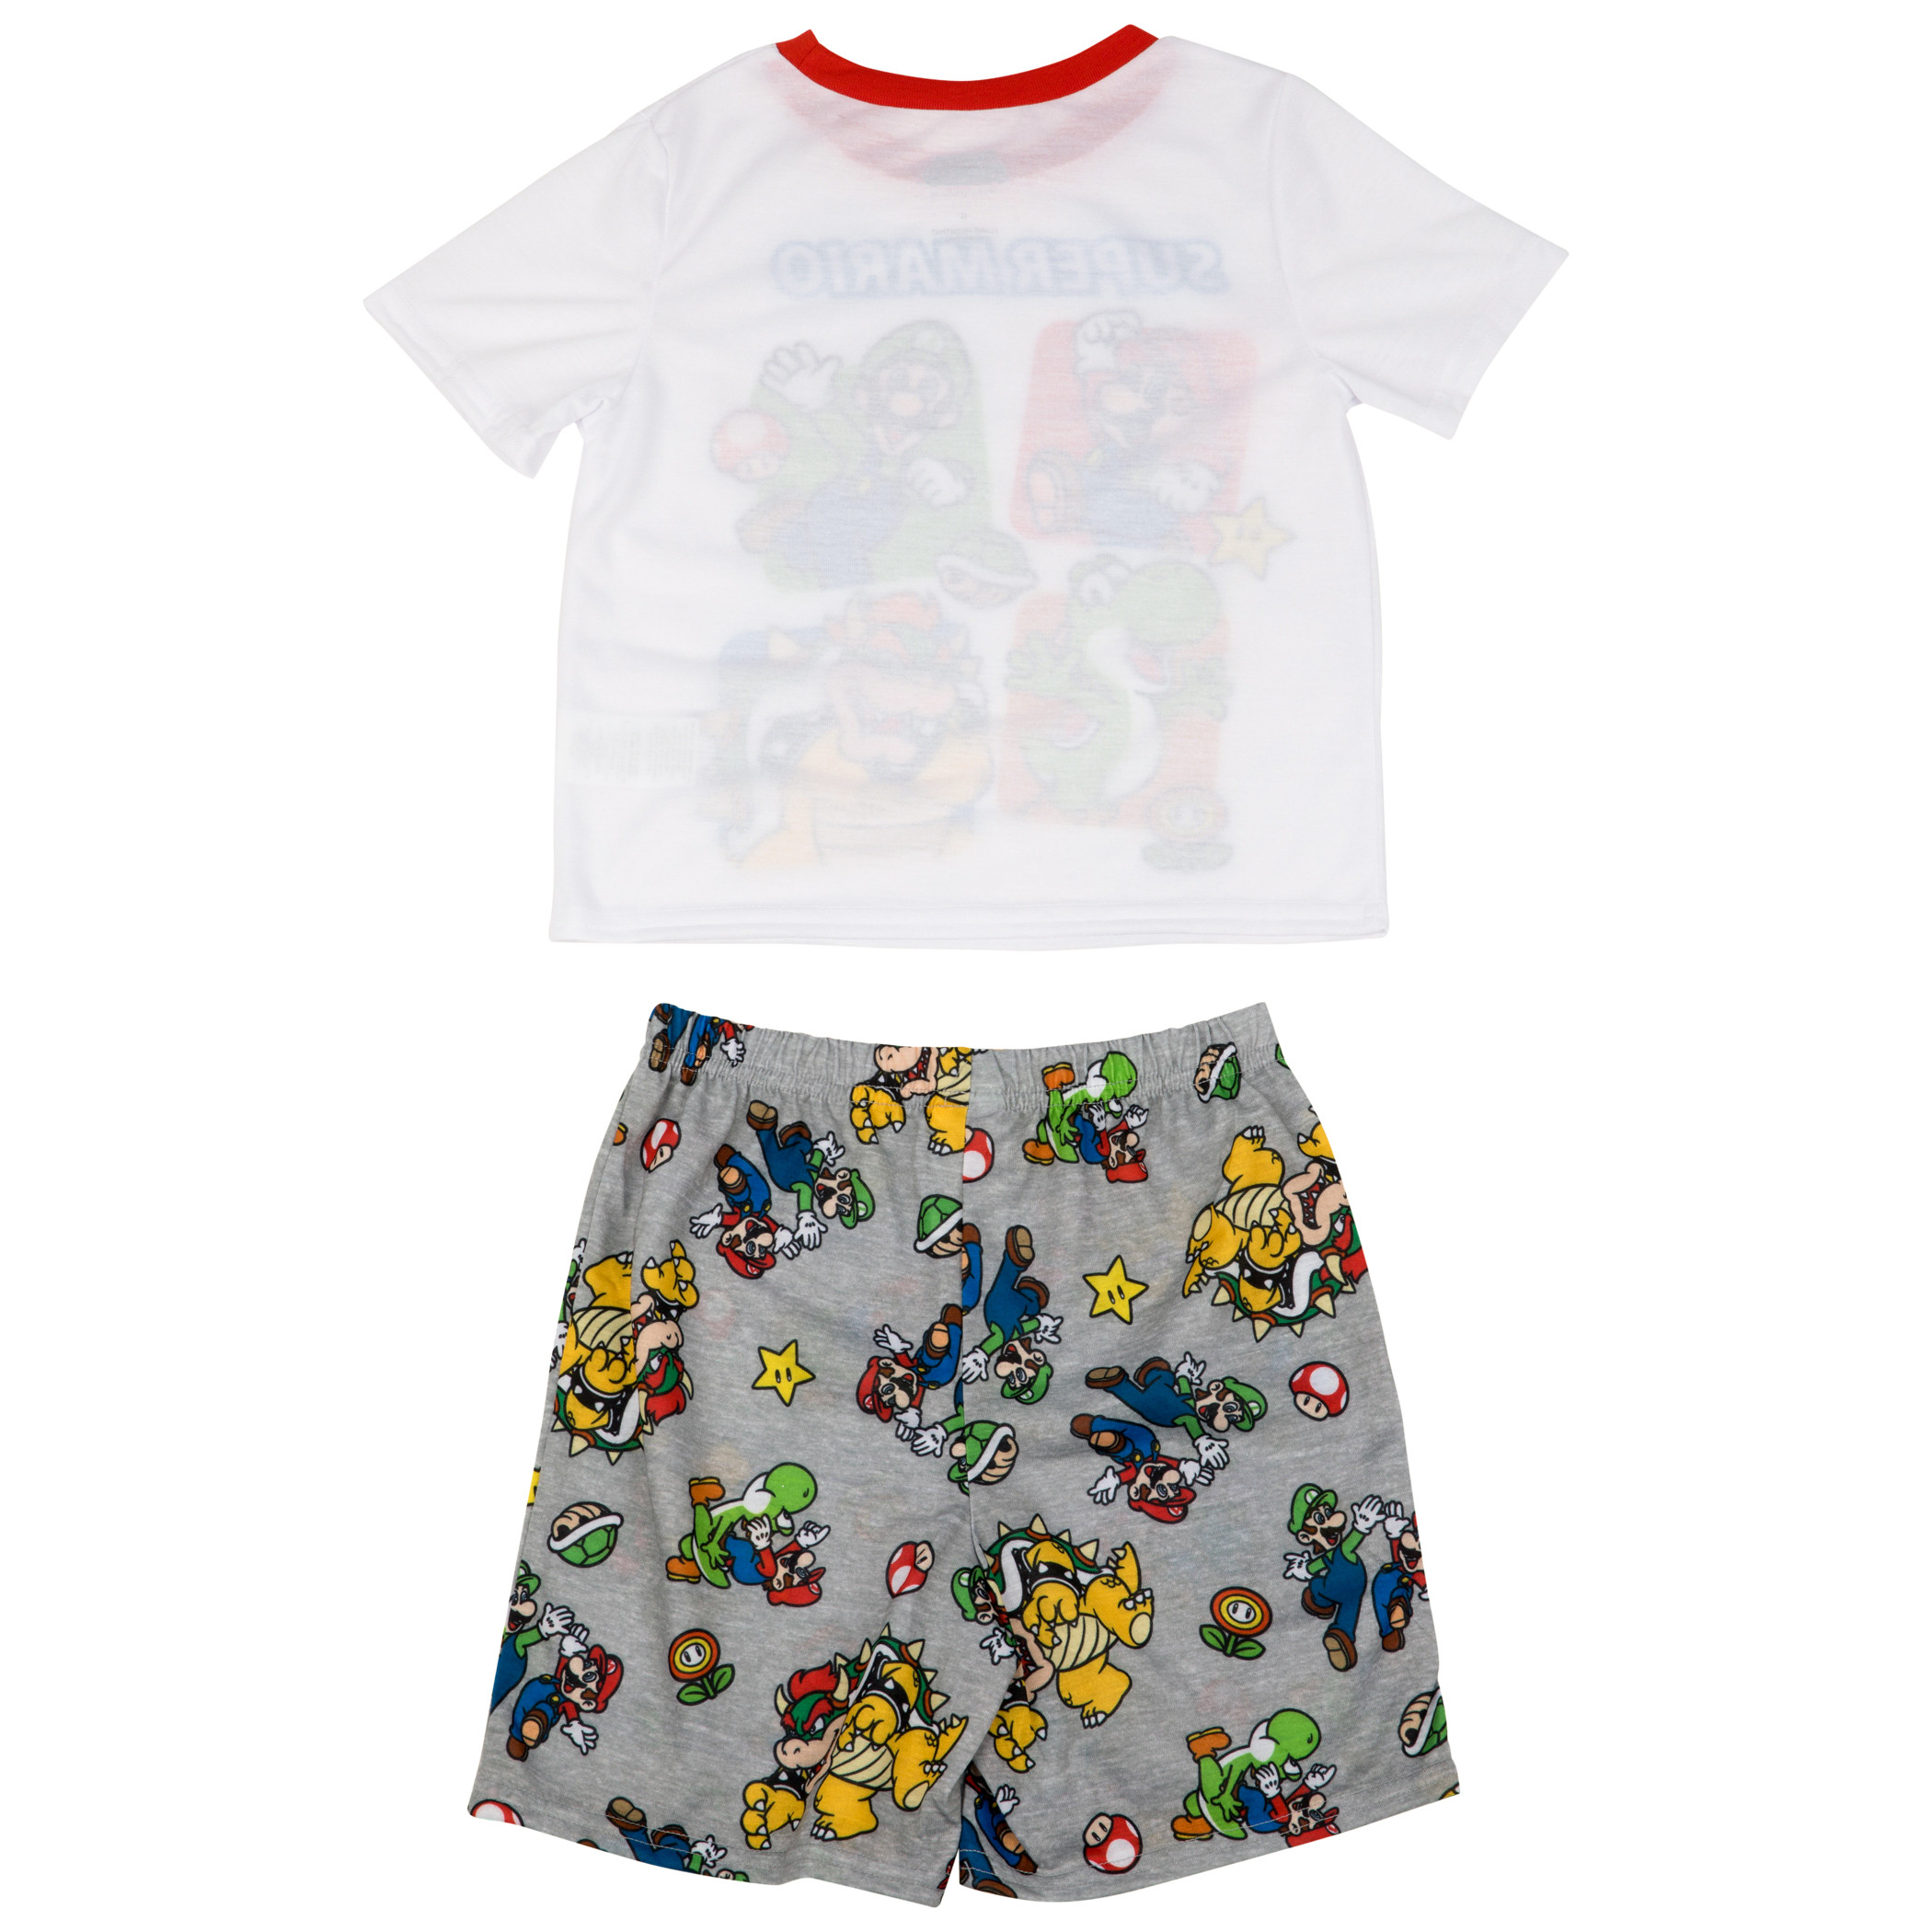 Super Mario Bros. Character Select Boy's 2-Piece Pajama Set